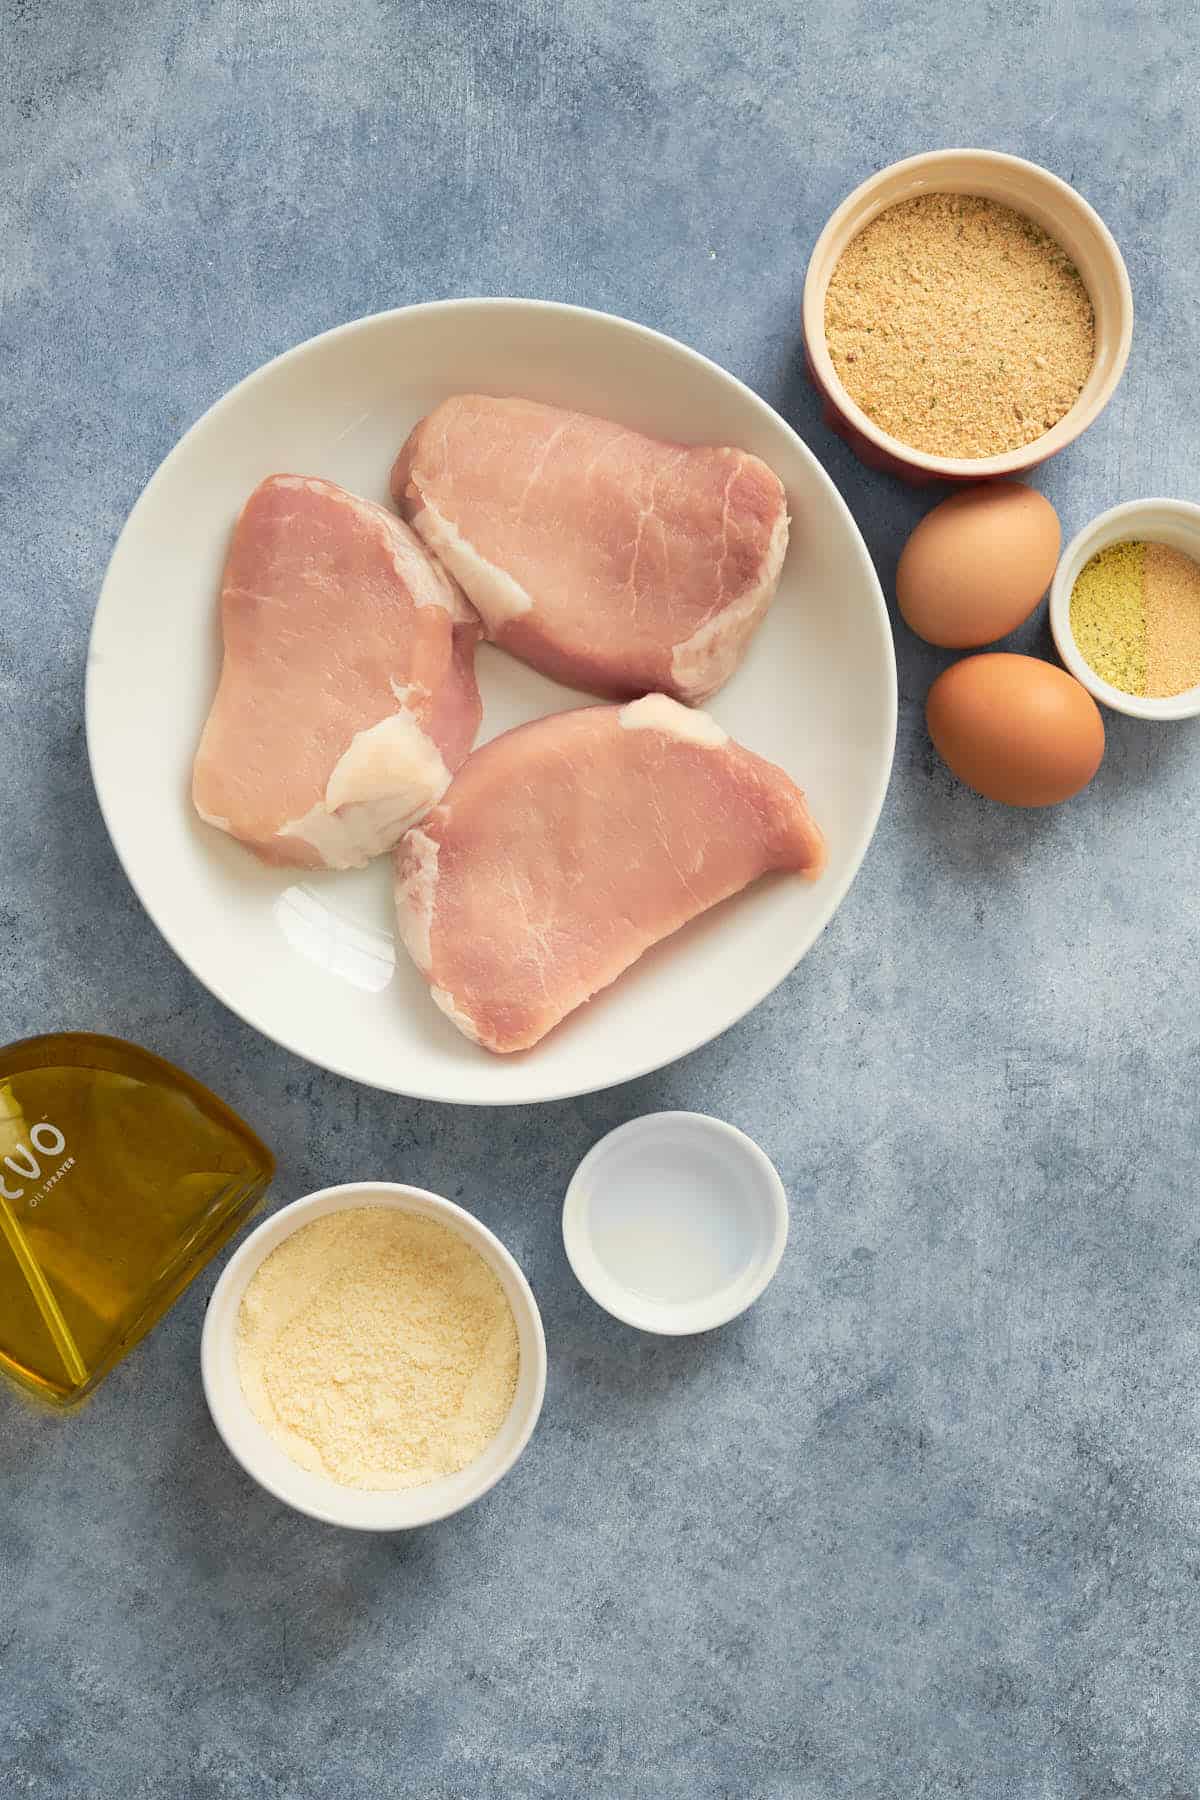 Ingredients to make breaded pork chops.